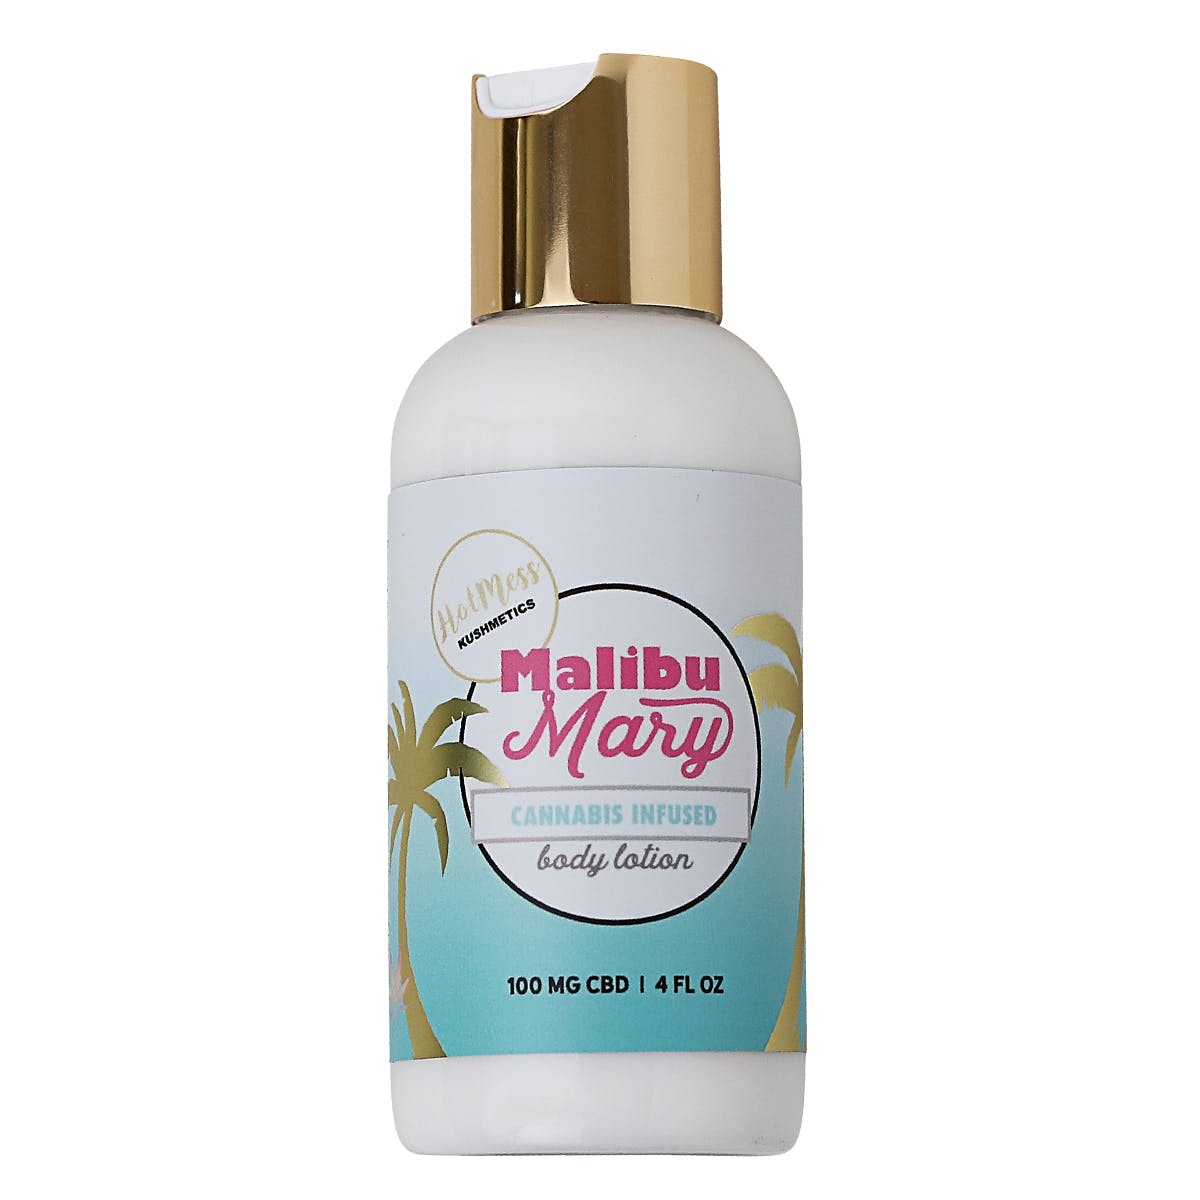 Malibu Mary Body Lotion, 4 oz / 100 mg CBD